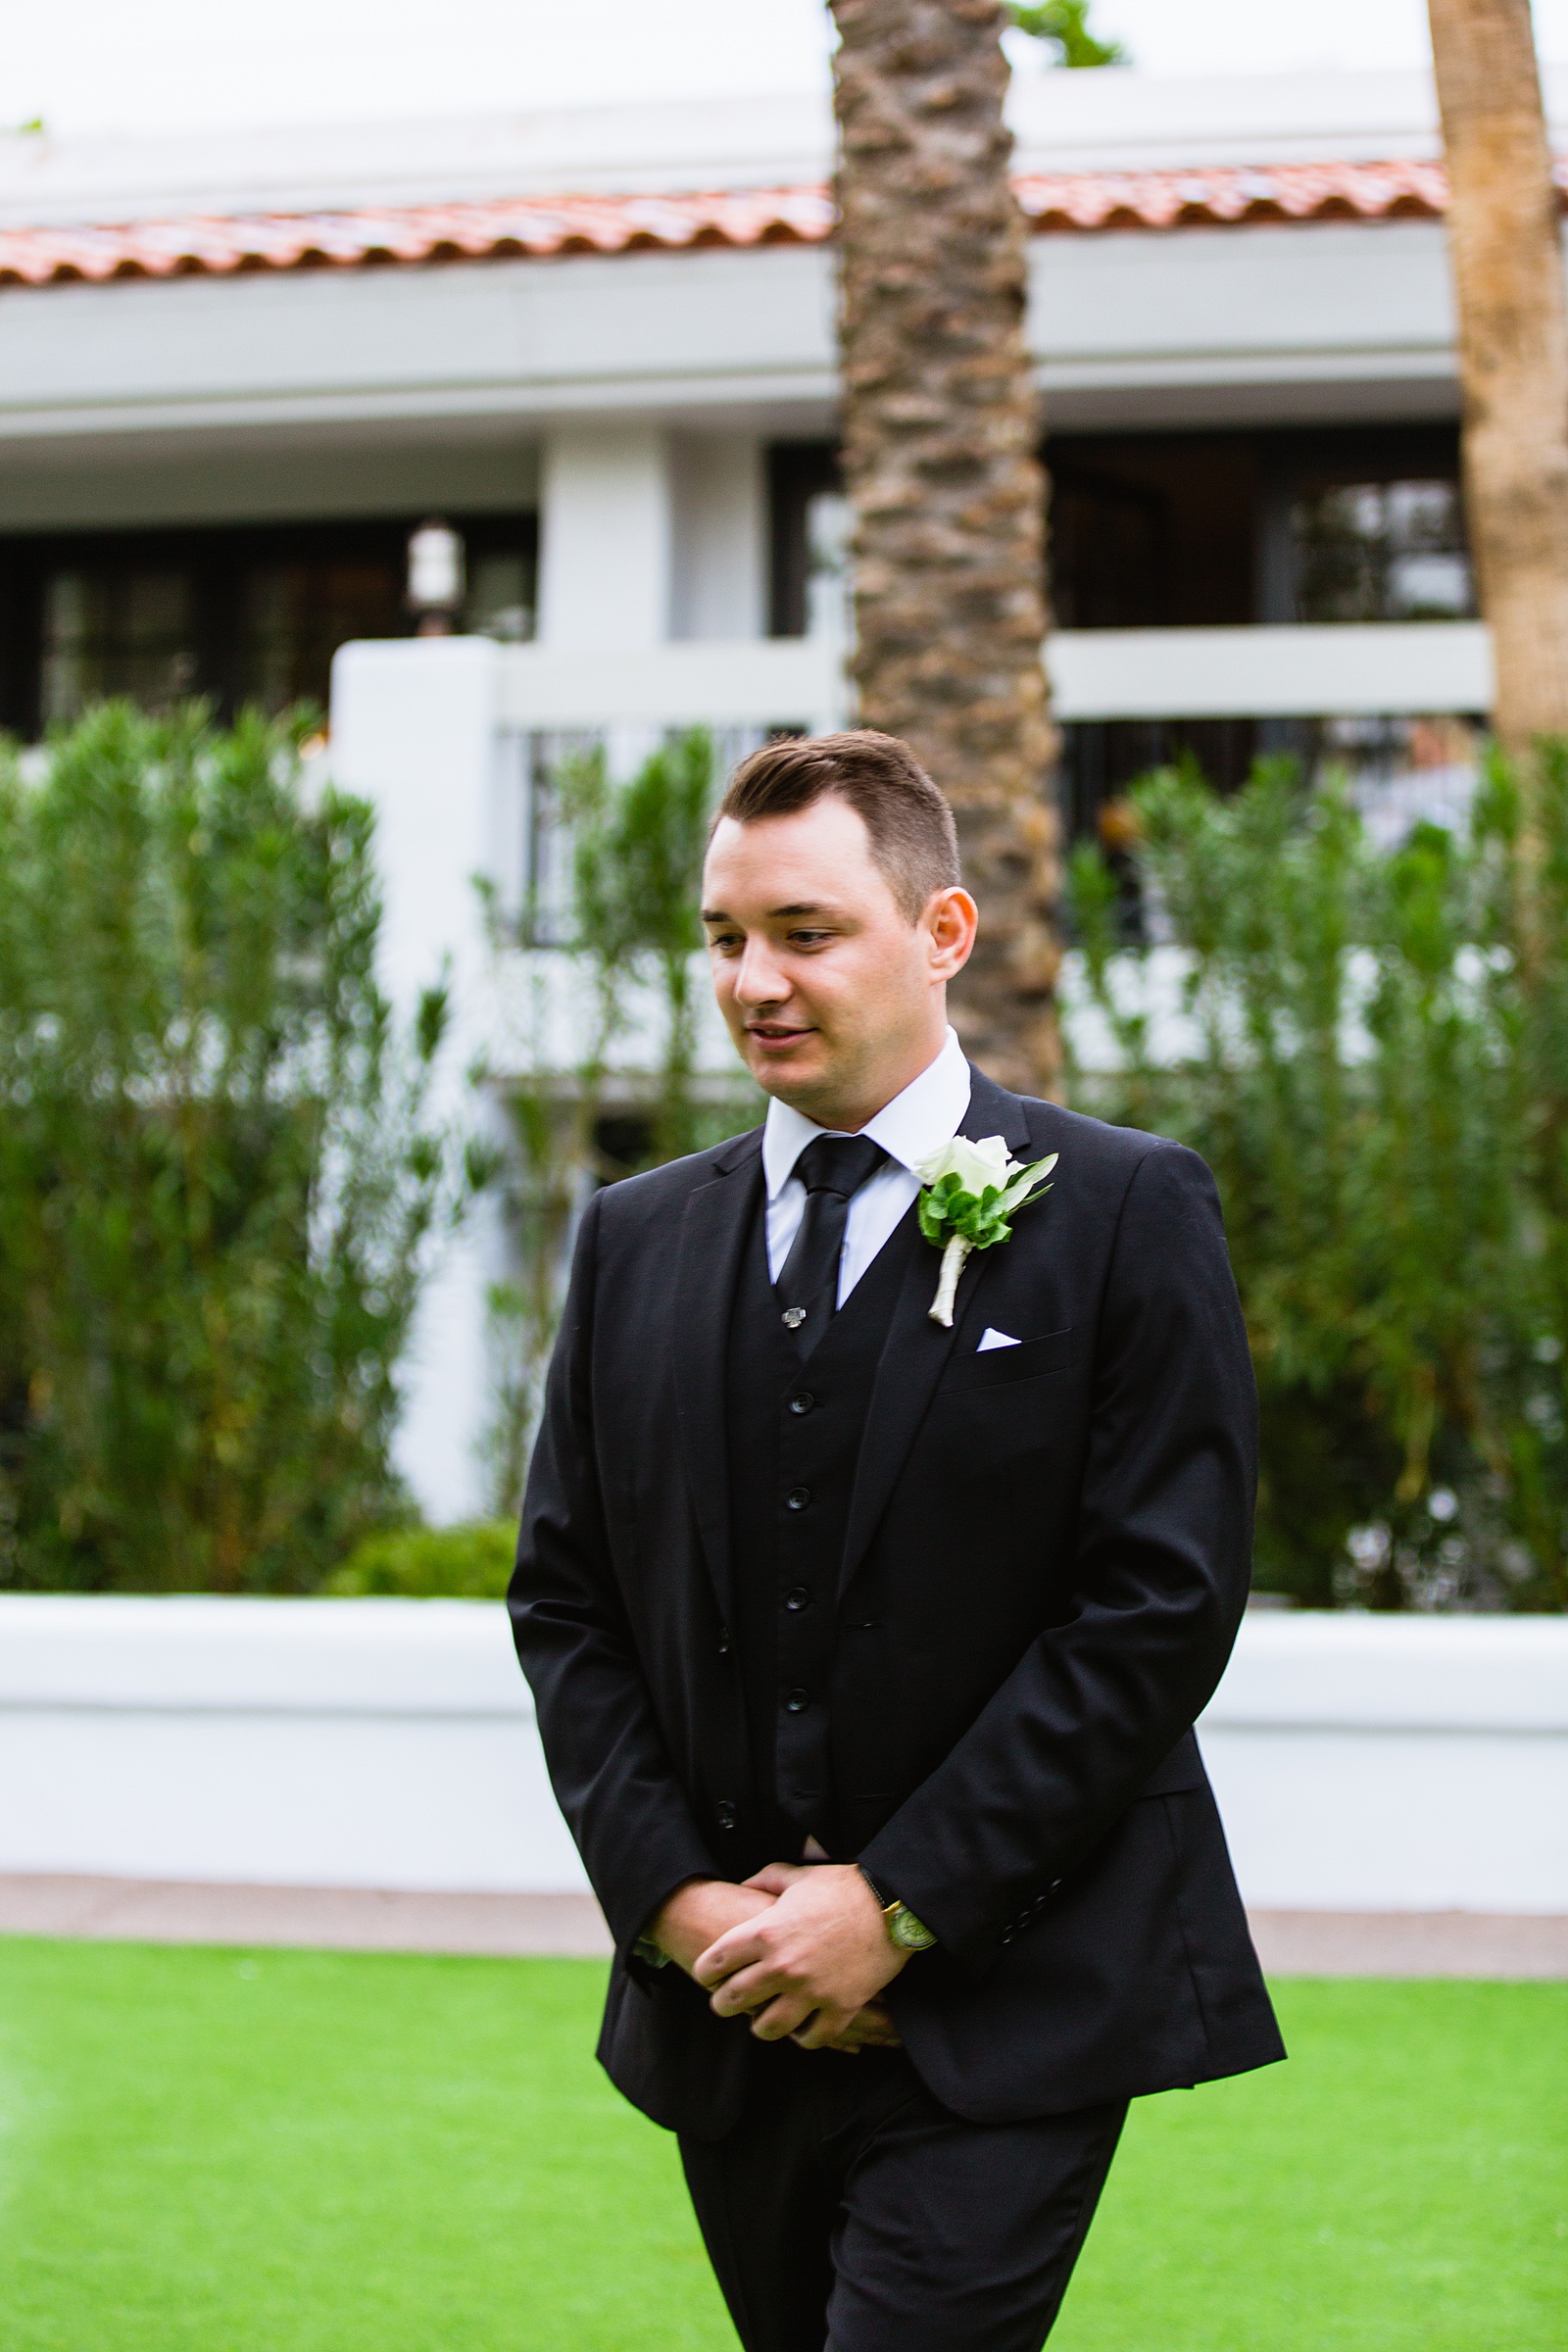 Groom walking down aisle during The Scott wedding ceremony by Phoenix wedding photographer PMA Photography.